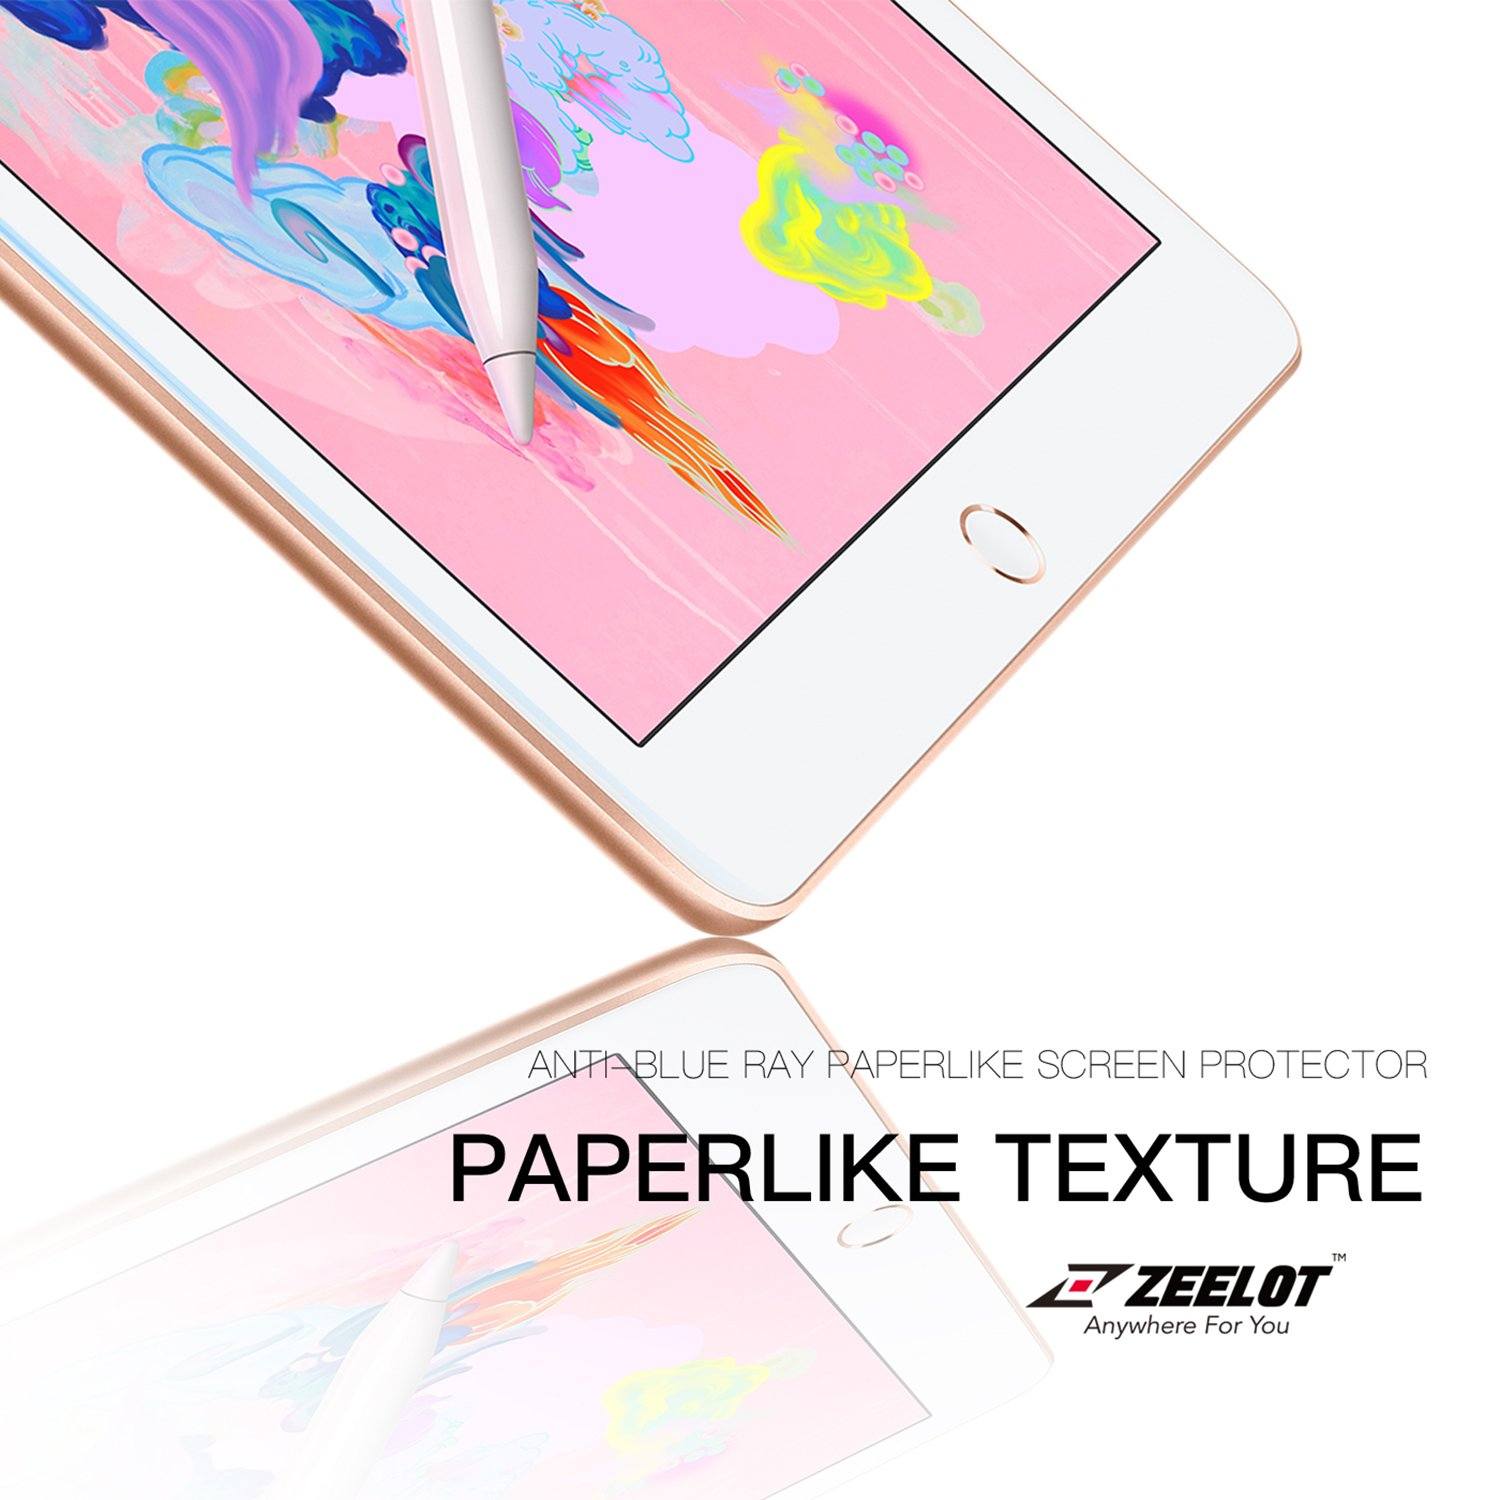 ZEELOT Paper Like Screen Protector for iPad Mini 5 7.9" (2019/2015), Anti Blue Ray Default ZEELOT 